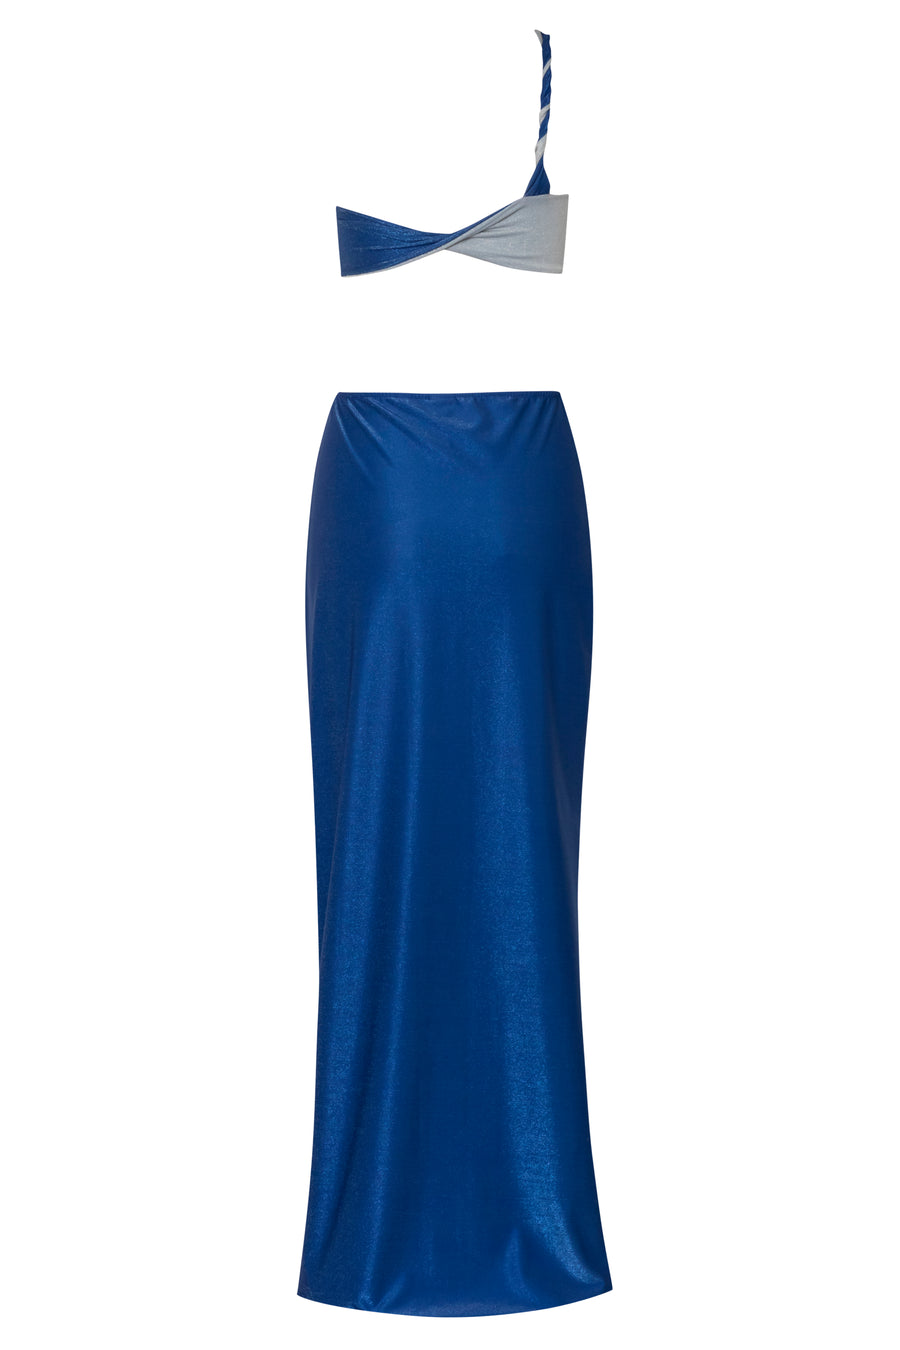 Luana Ultramarine Dress